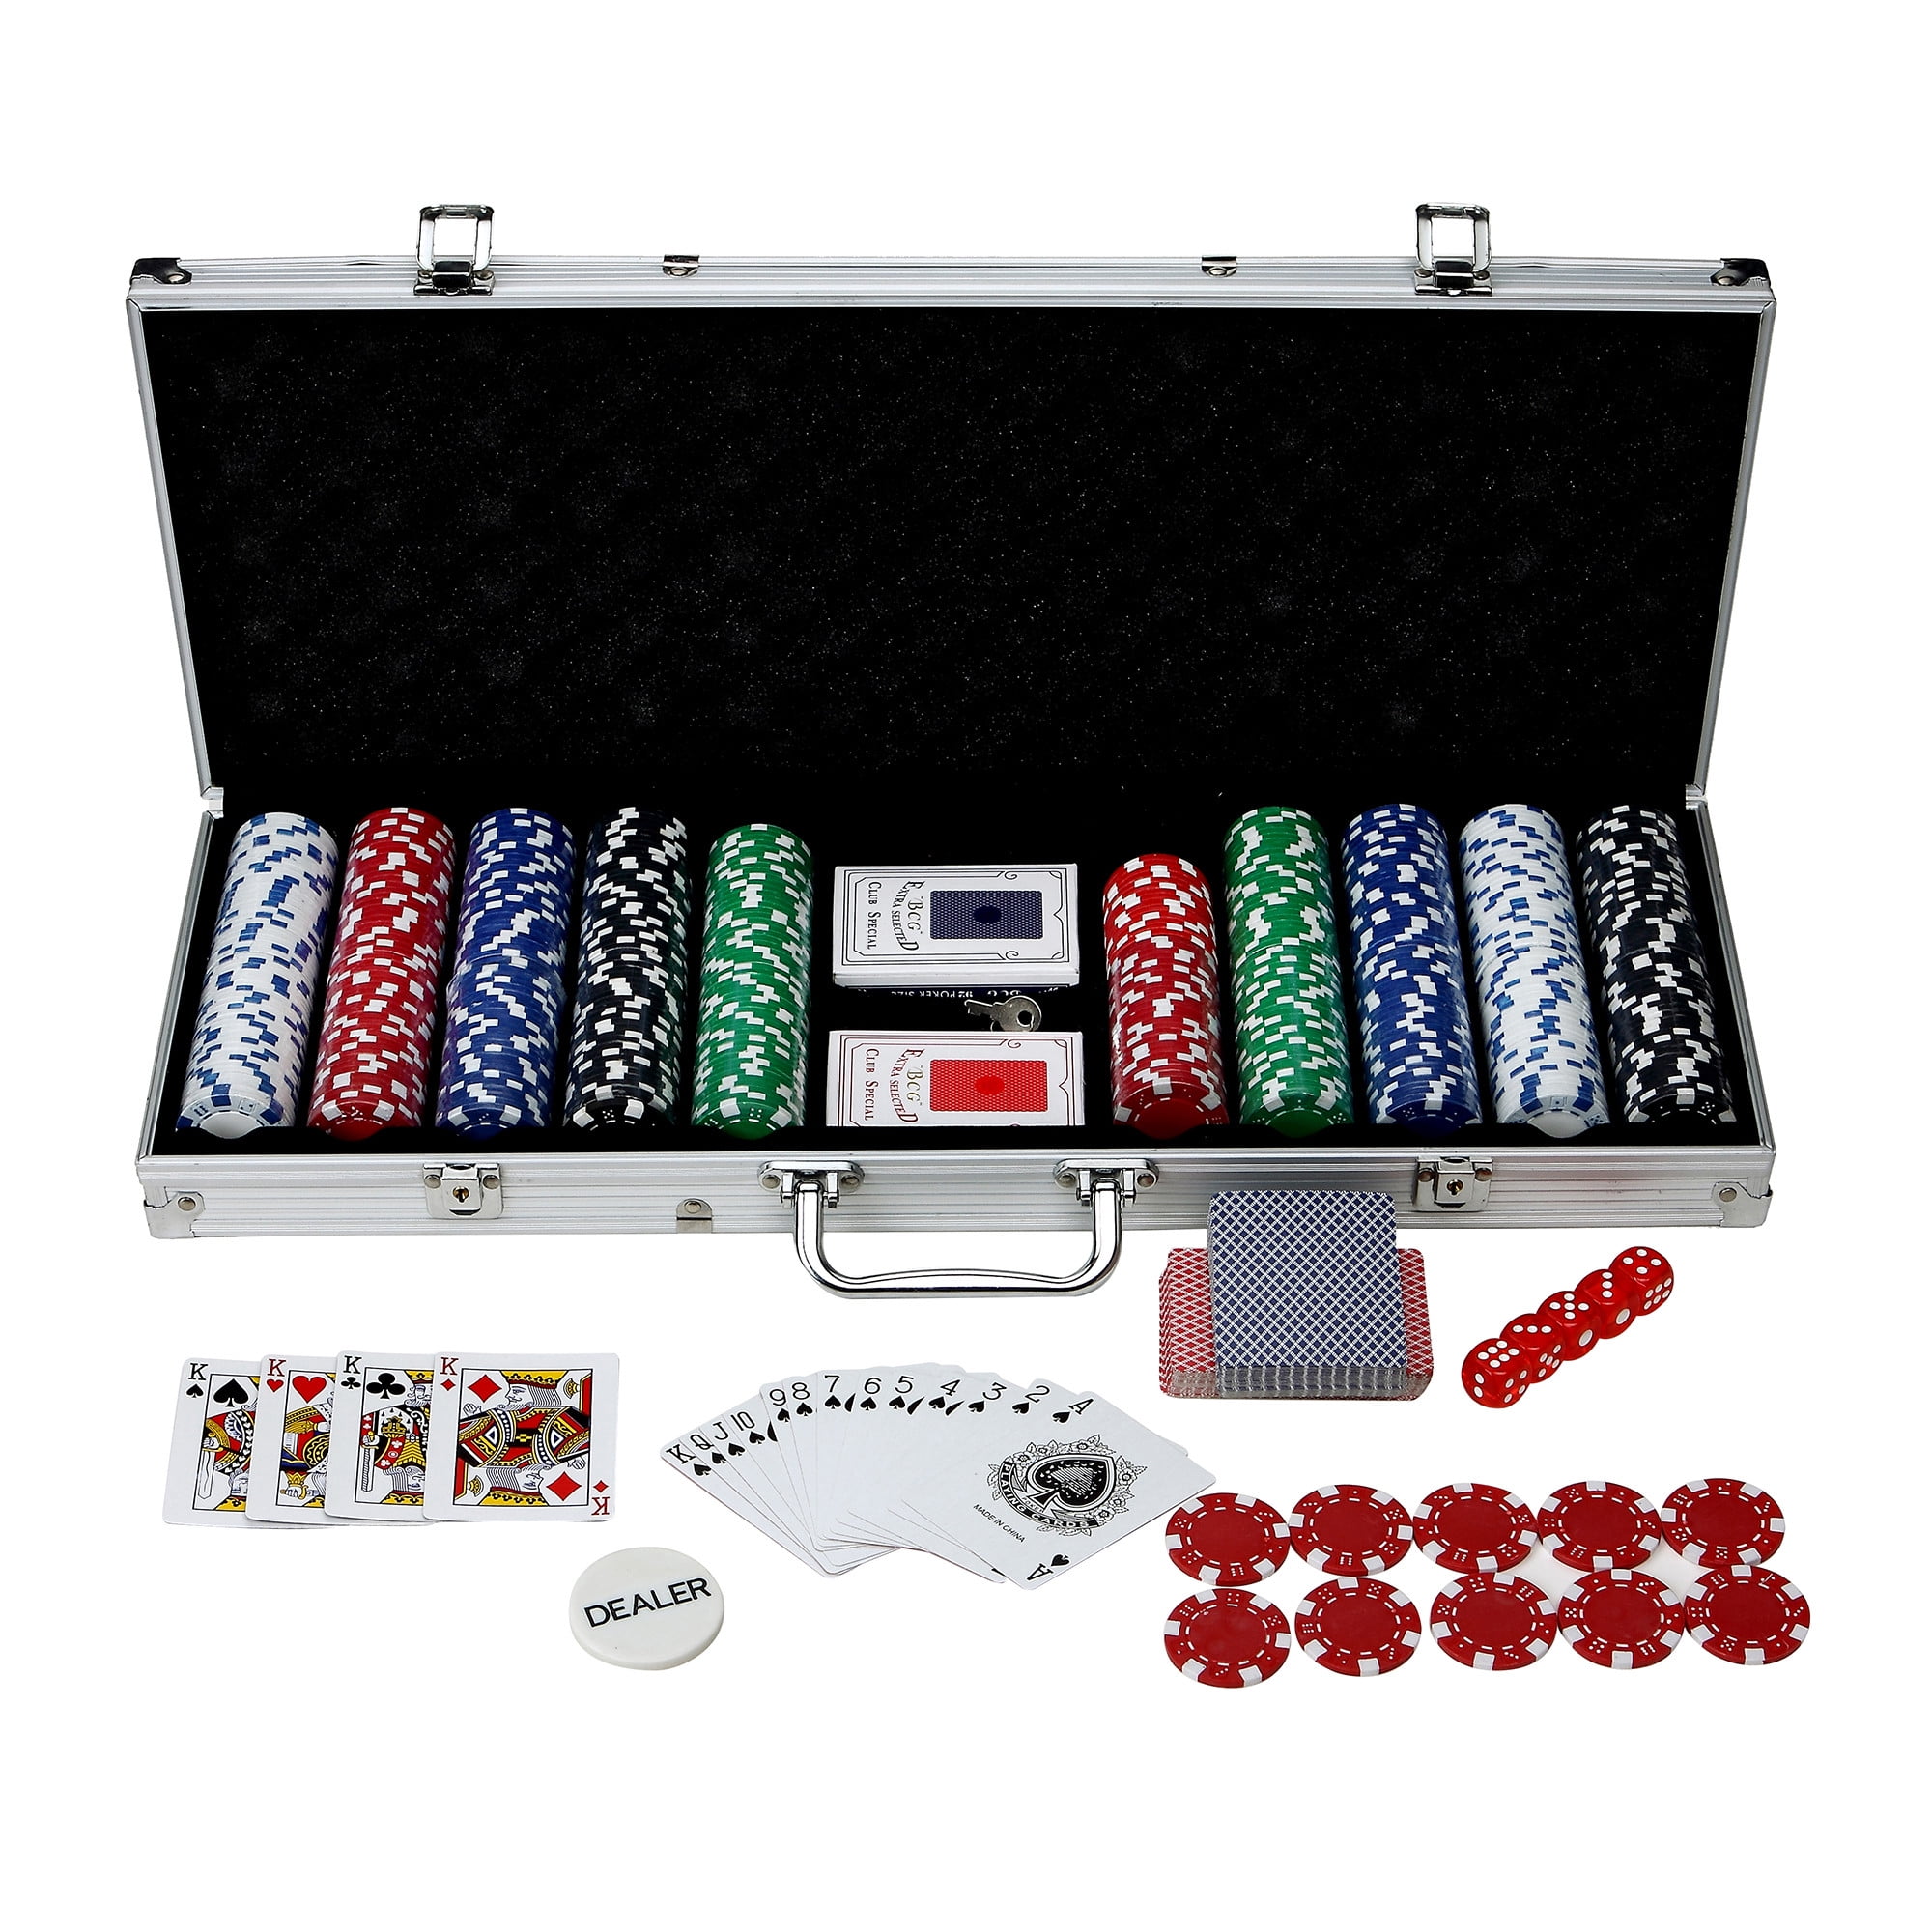 5 dice 2 decks of cards 300 Chip Dice Style Poker Set In Aluminum Case 11.5 Gr 